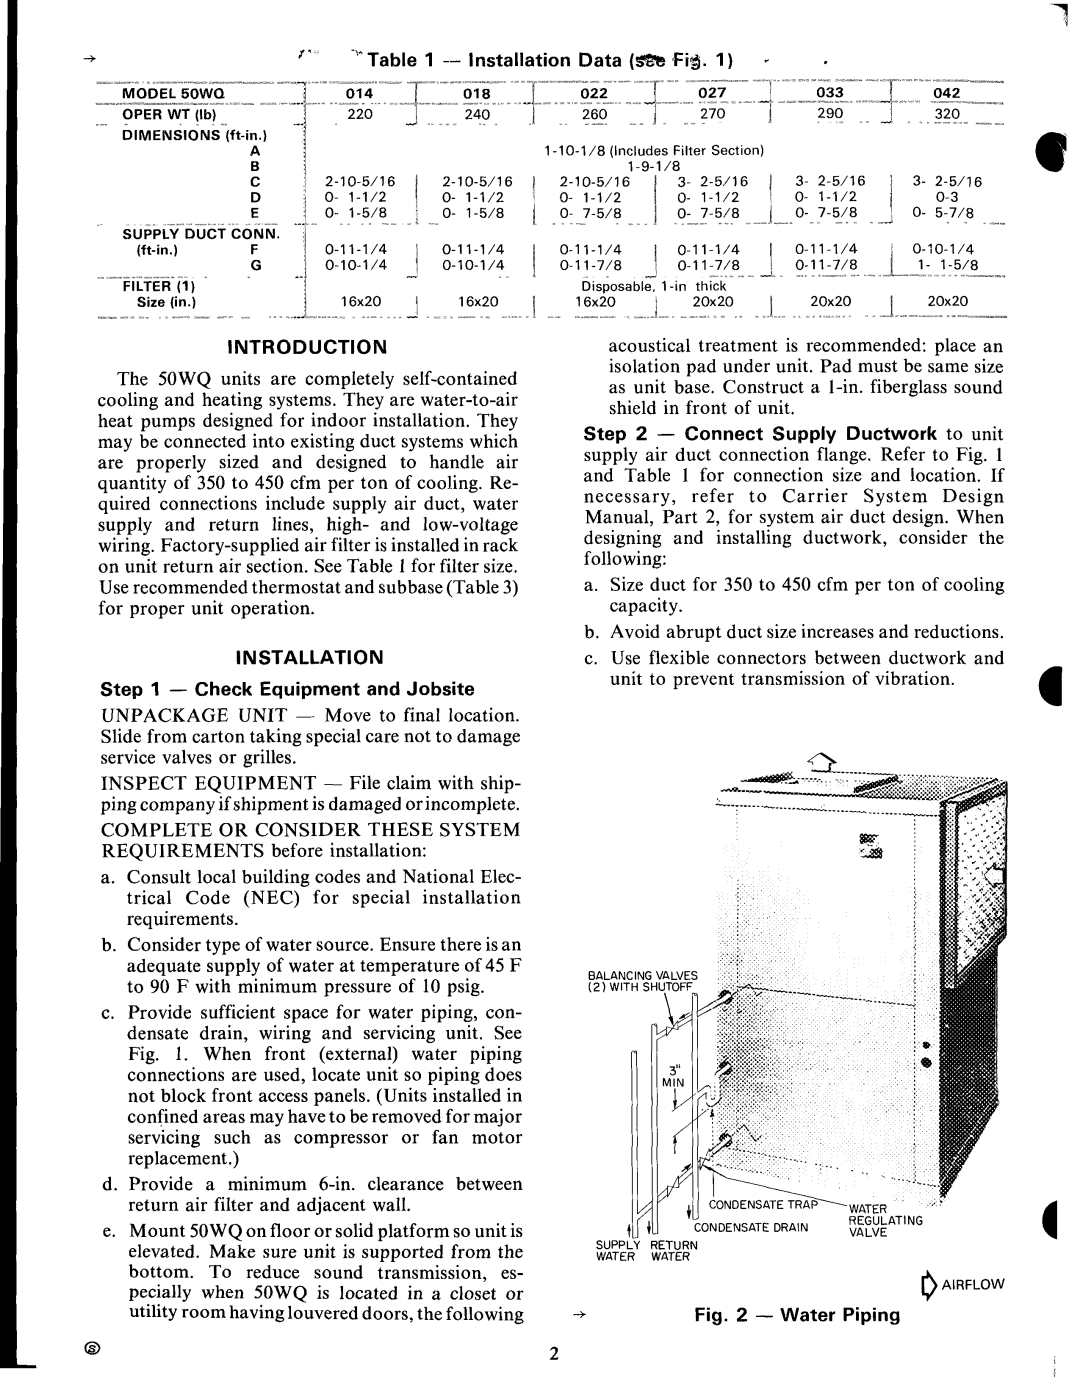 Carrier 50WQ manual 